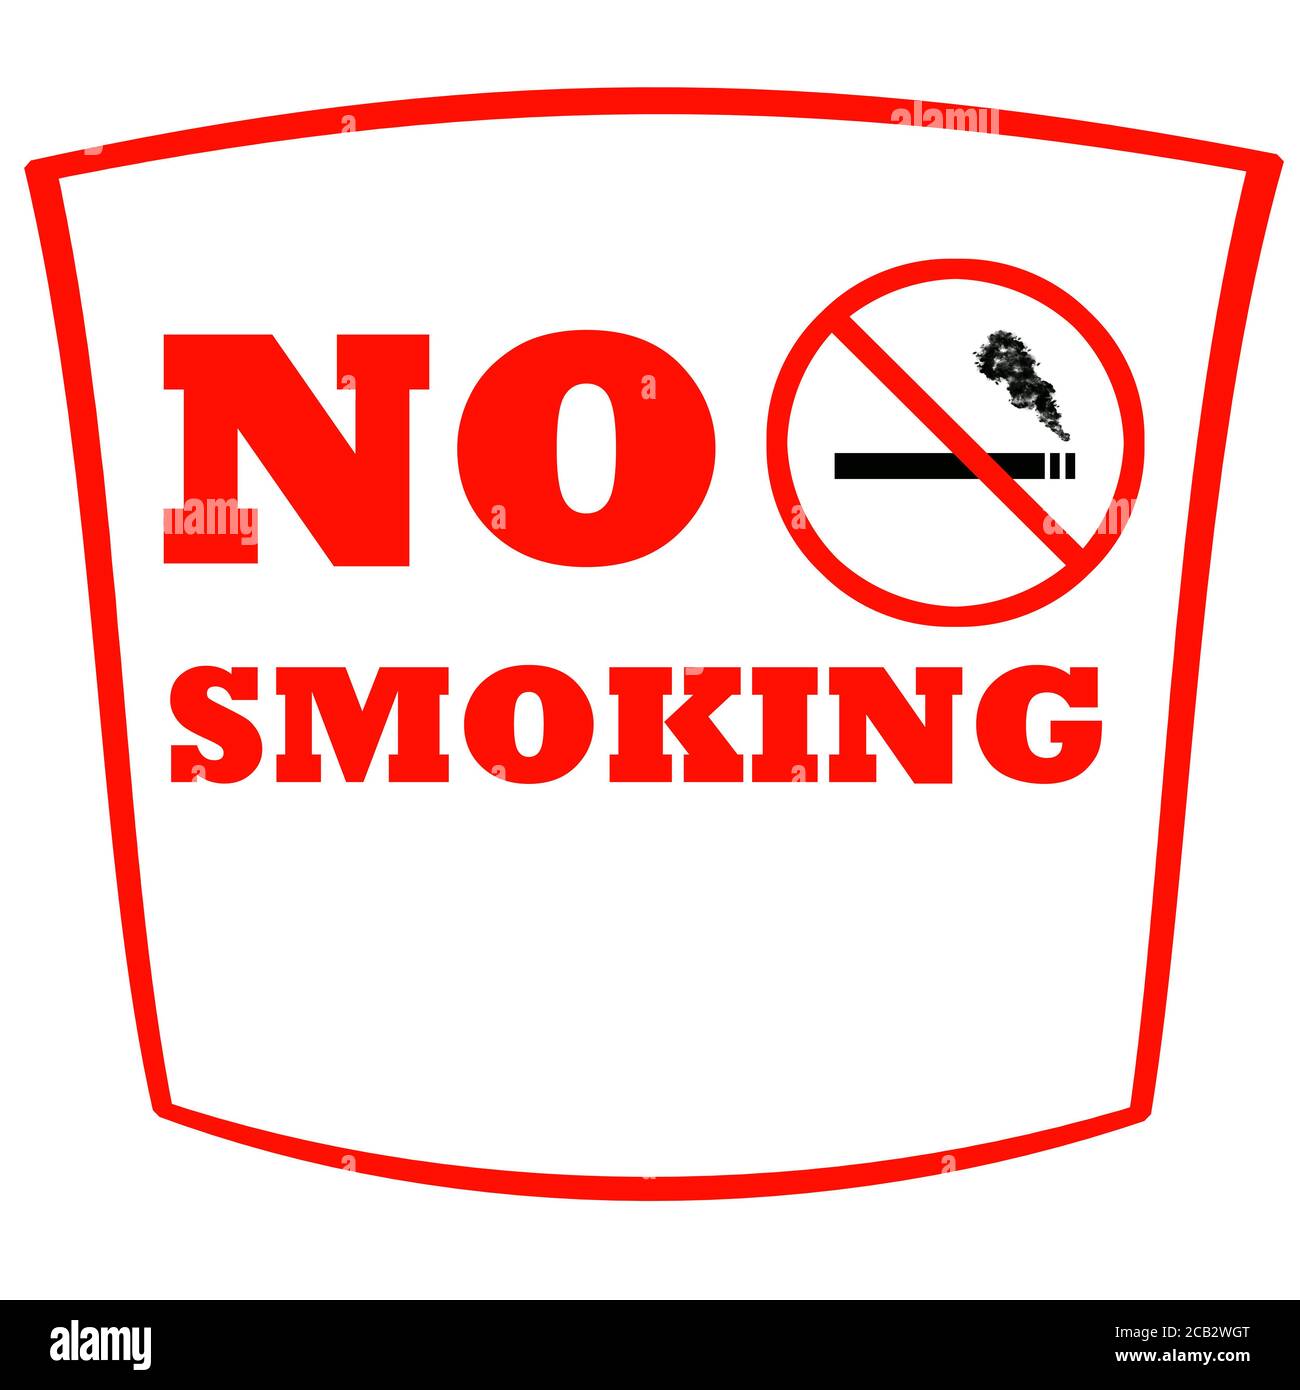 not smoking banner with no smoking sign Stock Photo